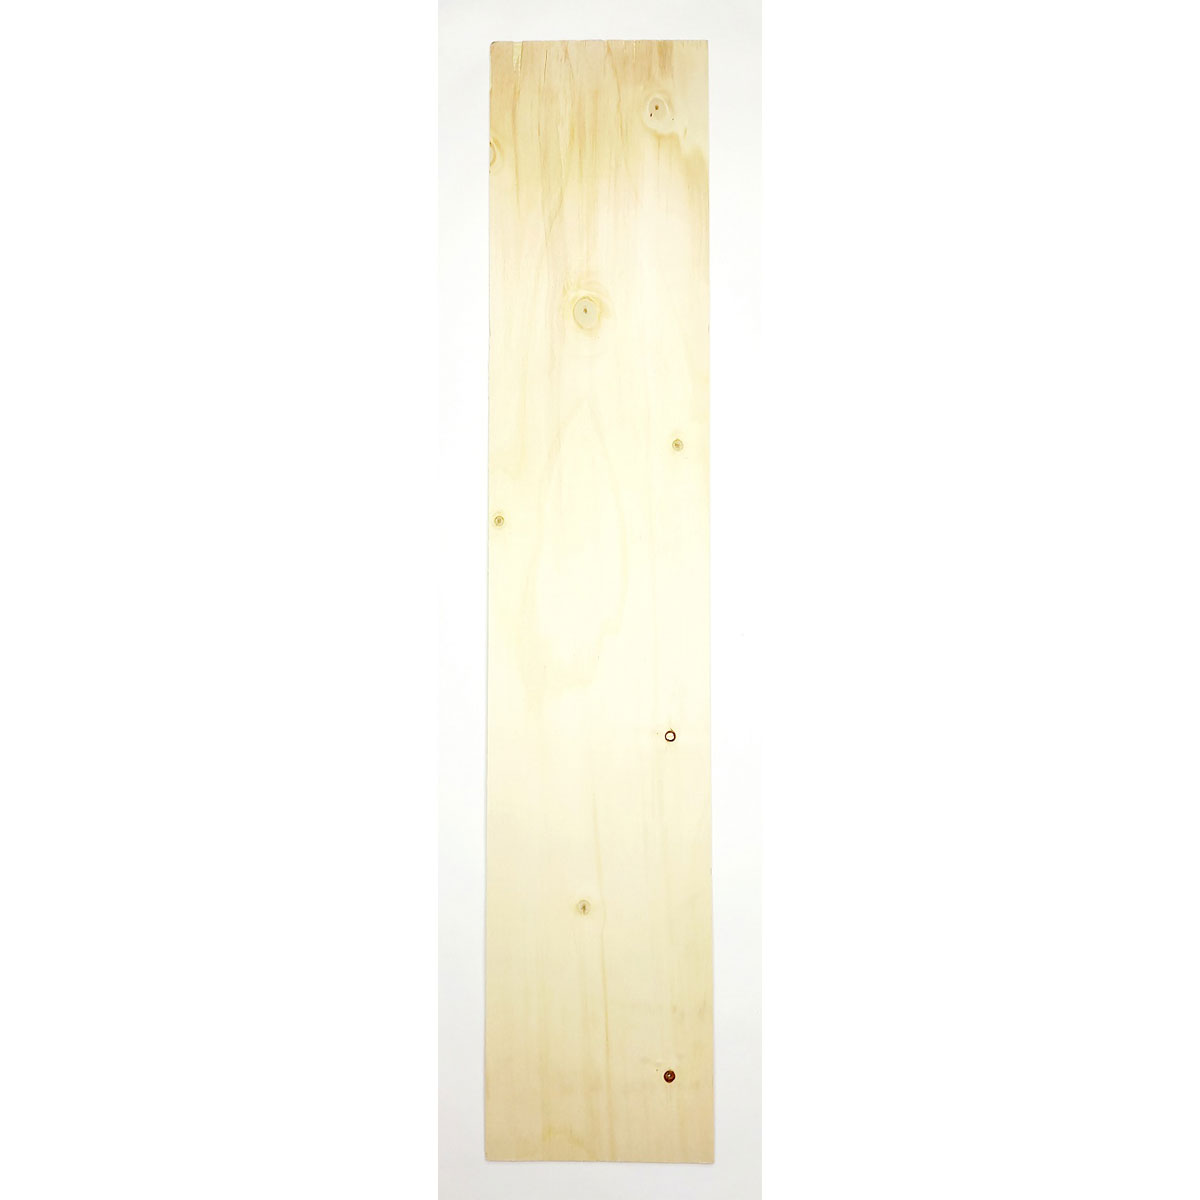 Modellbausperrholz, Pappel, 100x20x0,3 cm